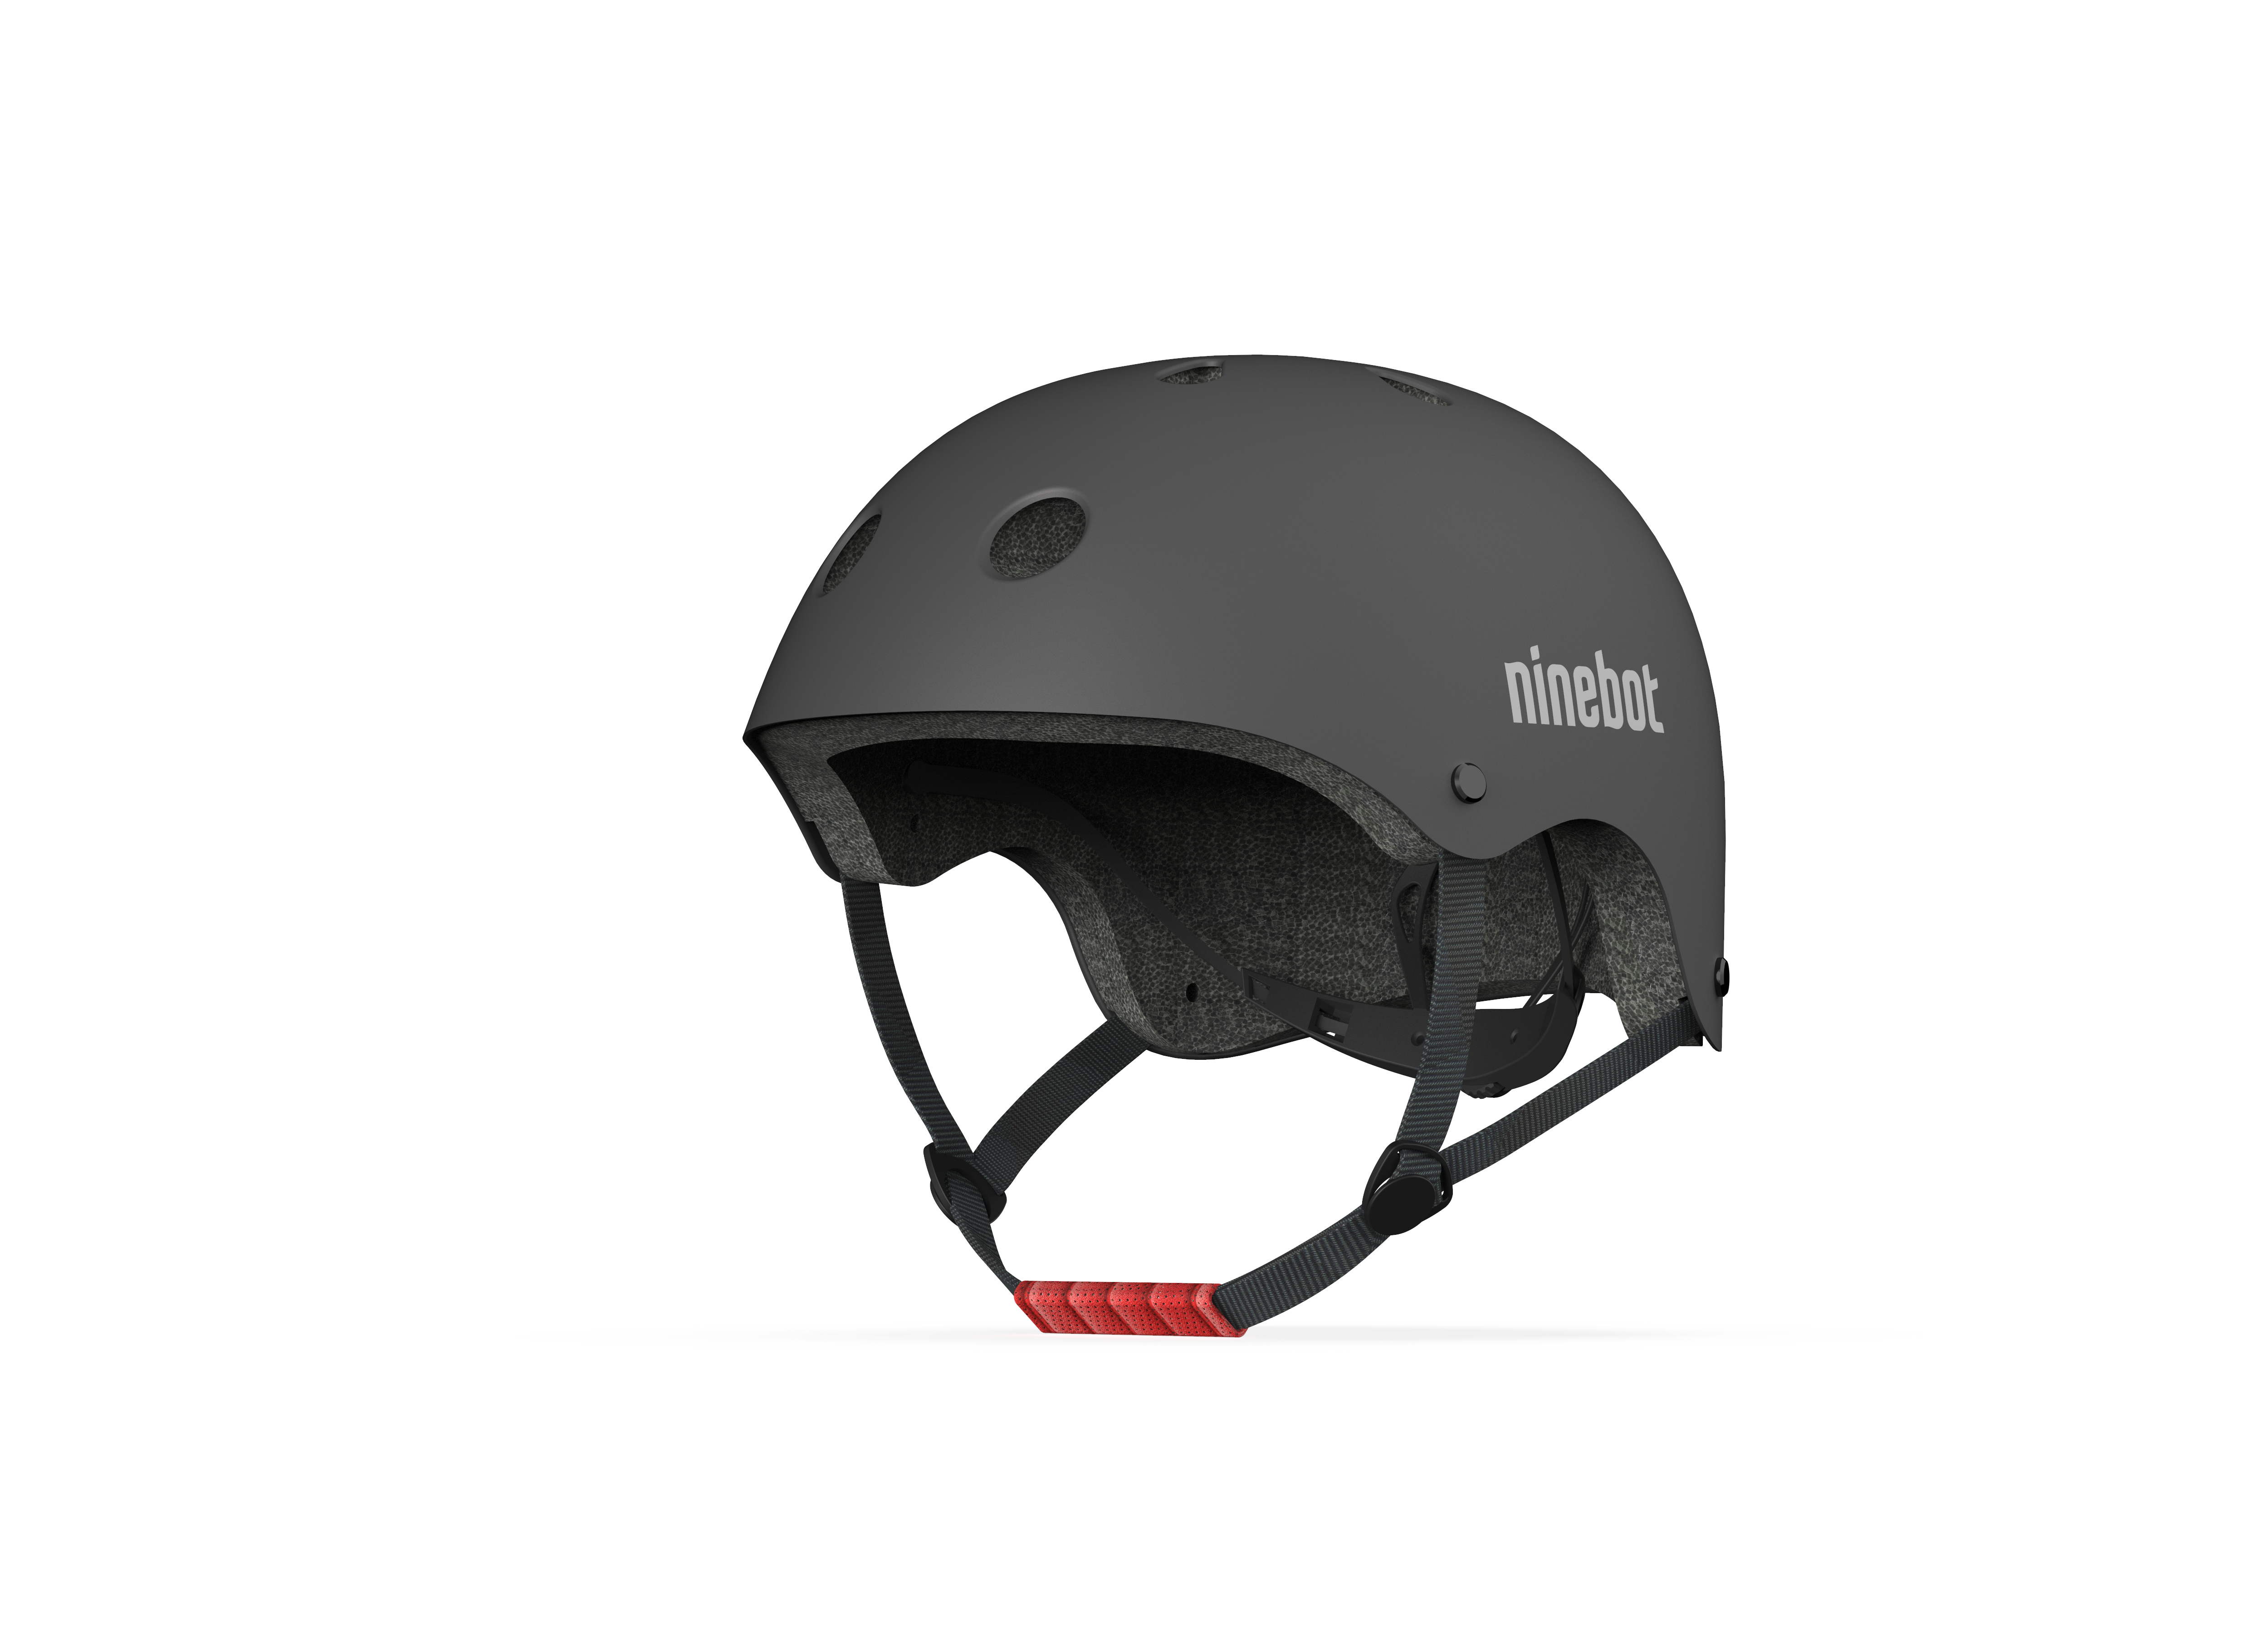 3802-510 54-60 cm, Schwarz) (Helm, NINEBOT